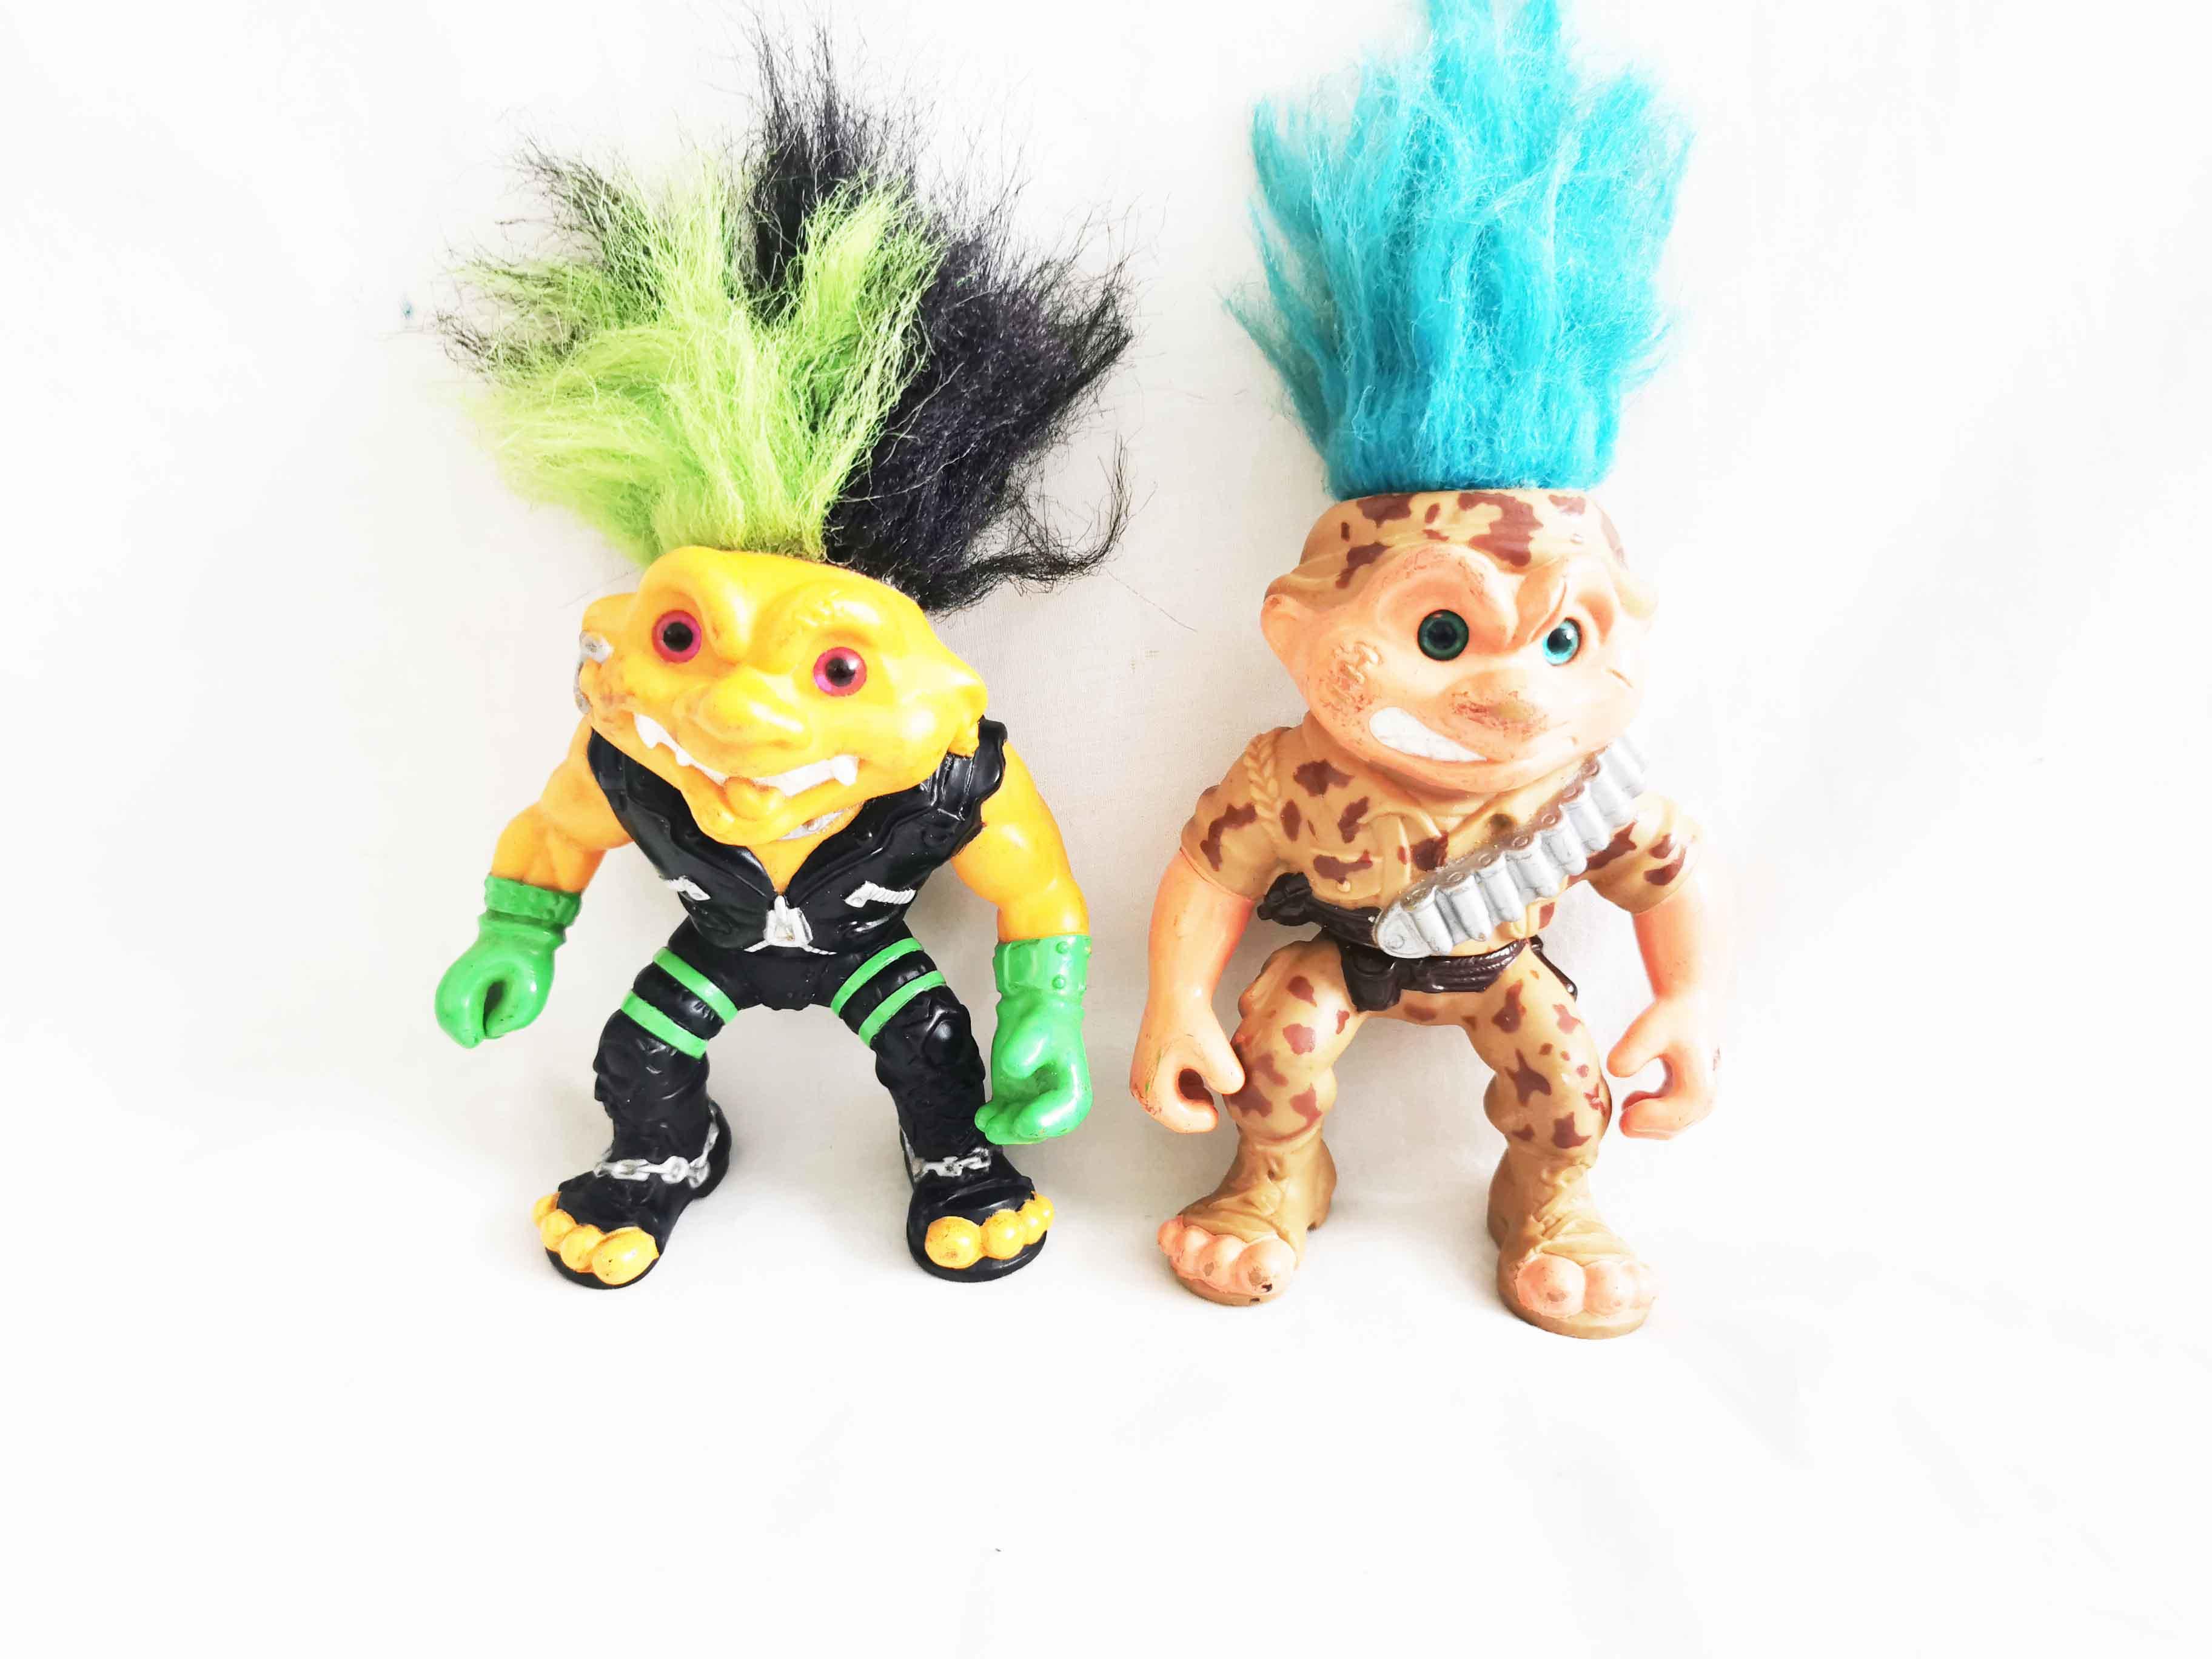 Punk Troll and General Troll Action Figures 5” Battle Trolls Hasbro